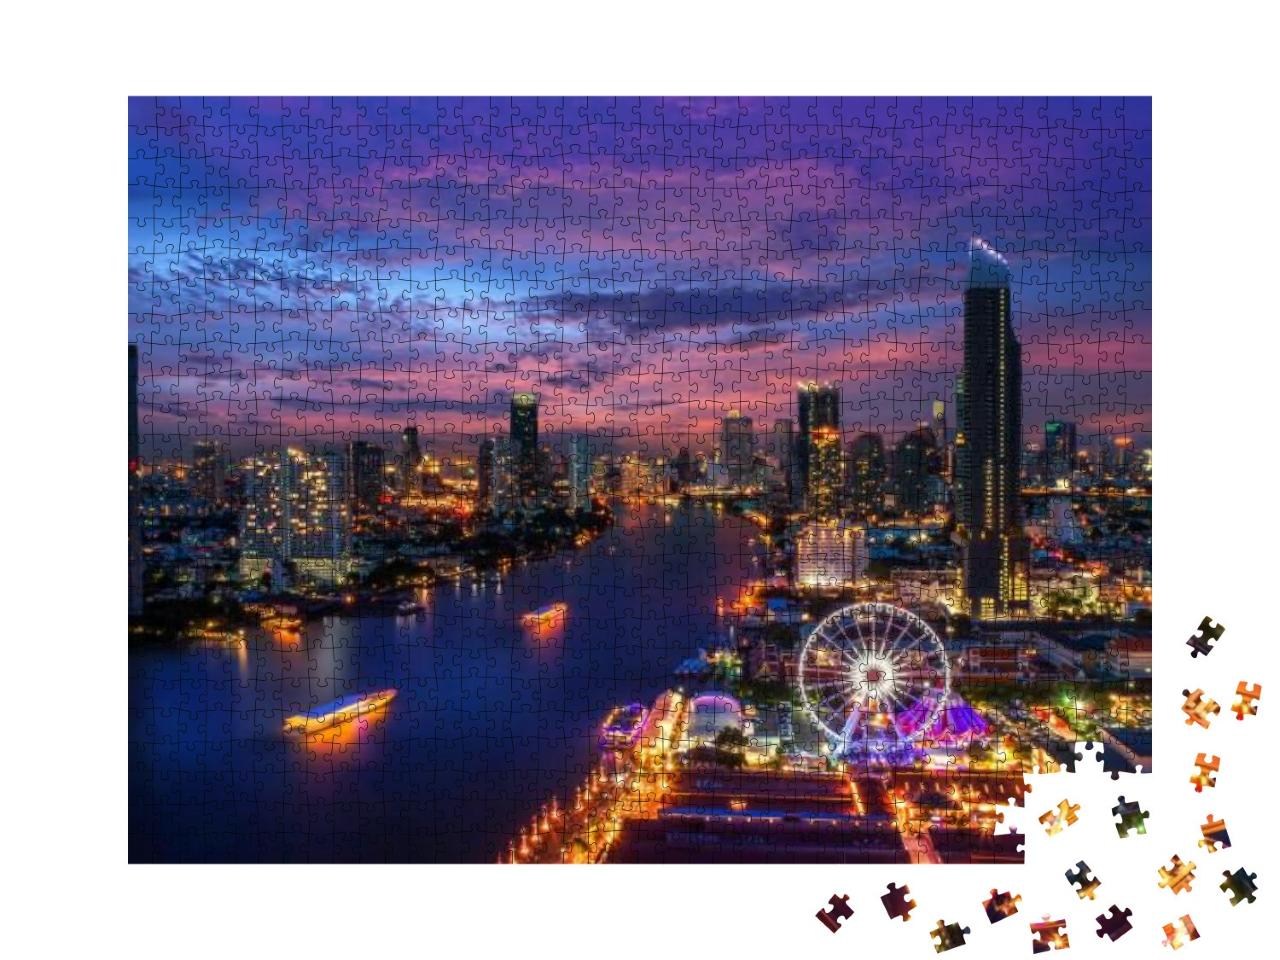 Puzzle 1000 Teile „Bangkok bei Nacht“